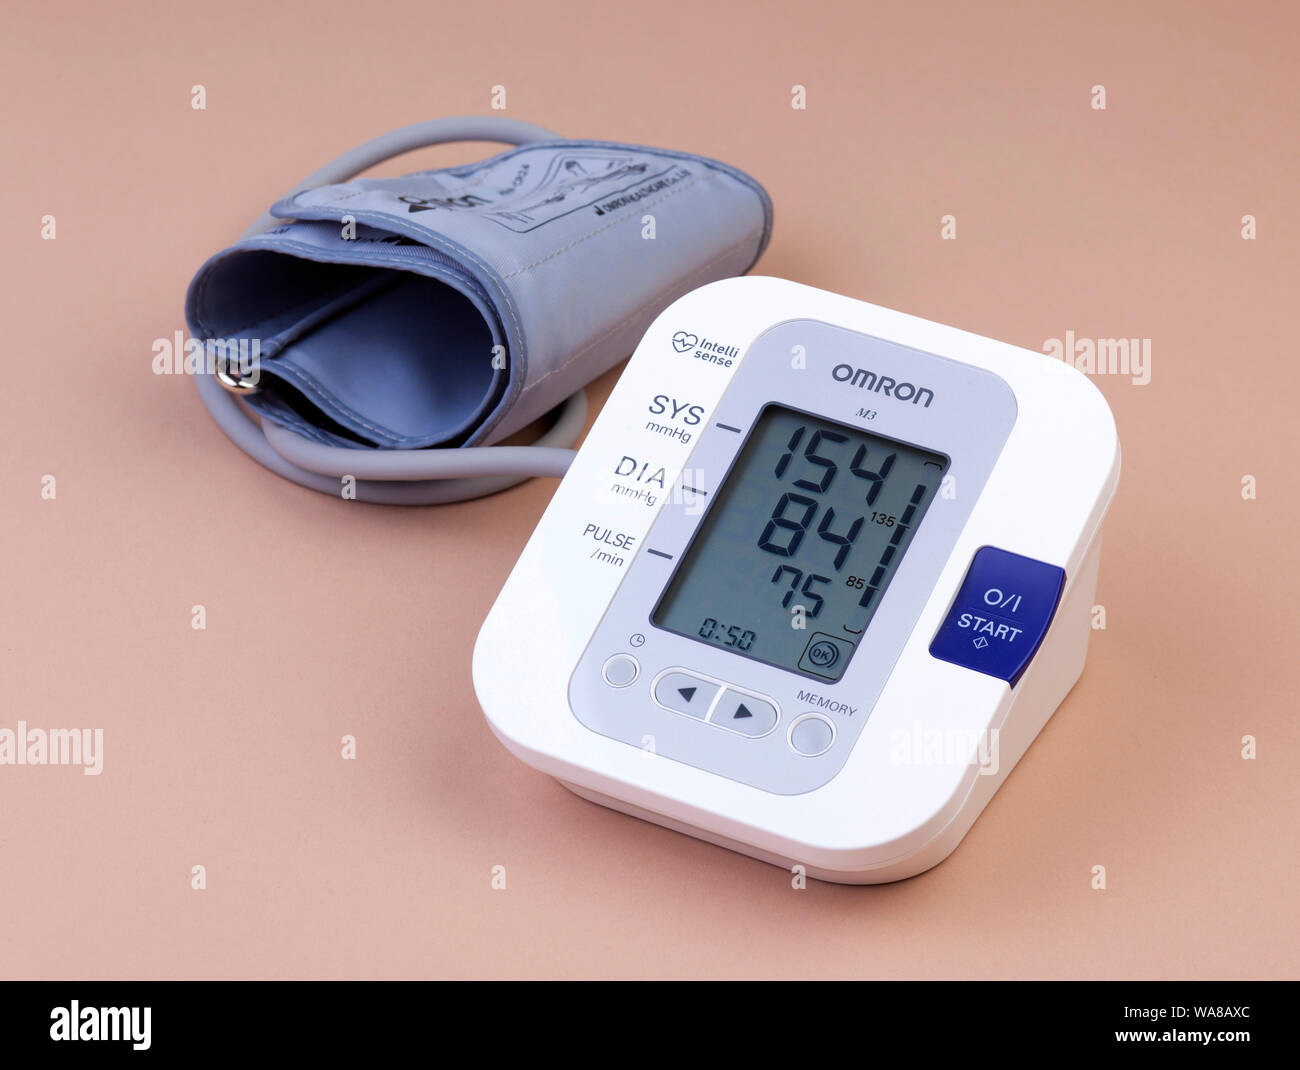 https://c8.alamy.com/comp/WA8AXC/omron-m3-blood-pressure-and-heart-rate-monitor-WA8AXC.jpg